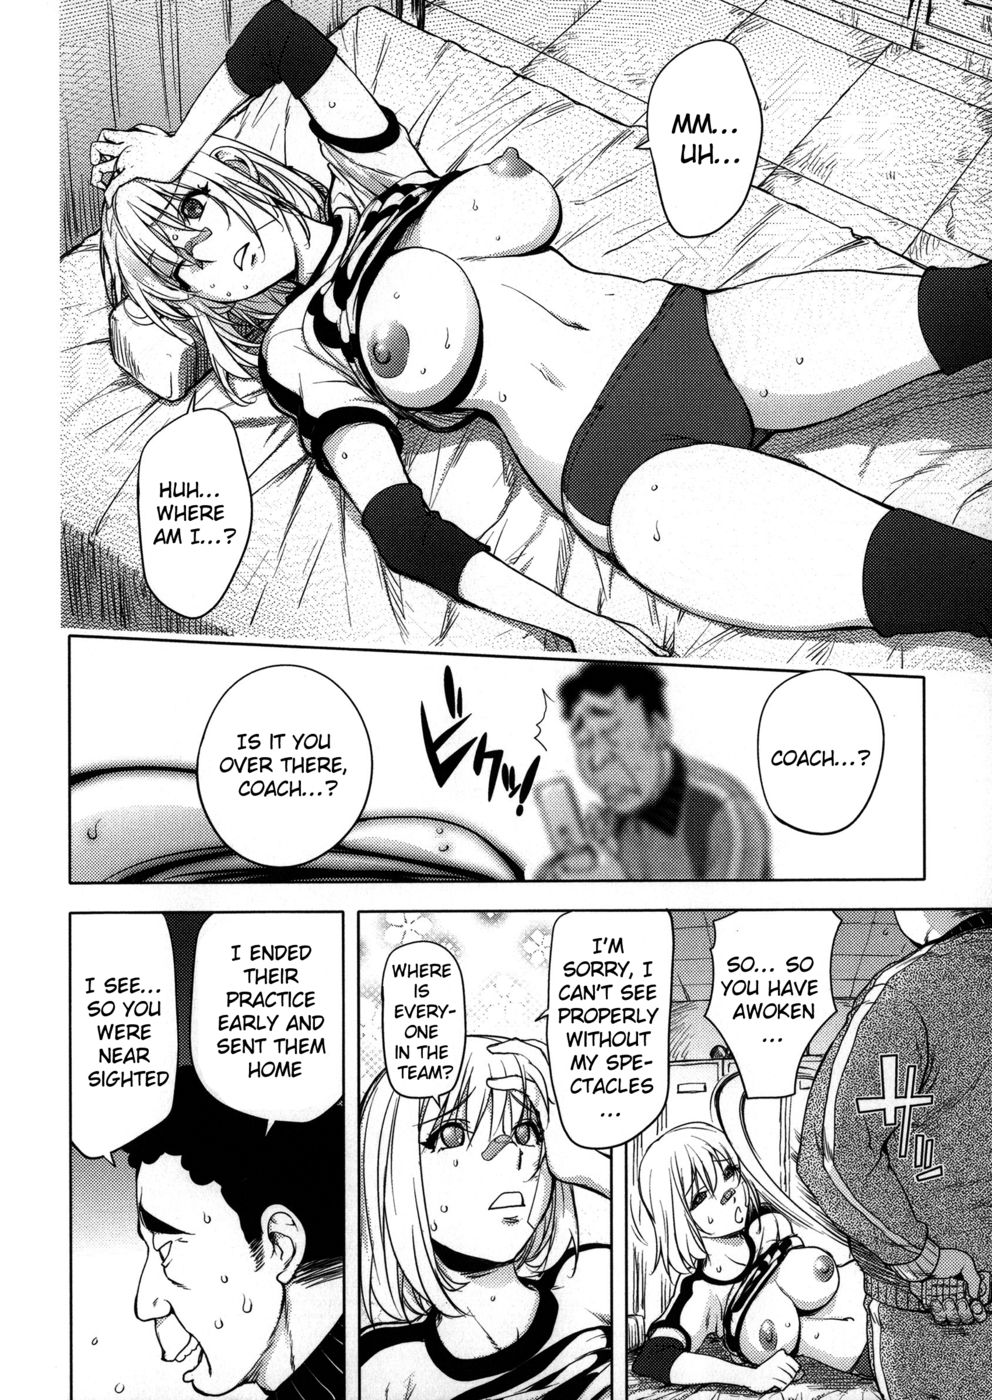 Hentai Manga Comic-Kaye-nee Challenging Herself in Volleyball-Read-4